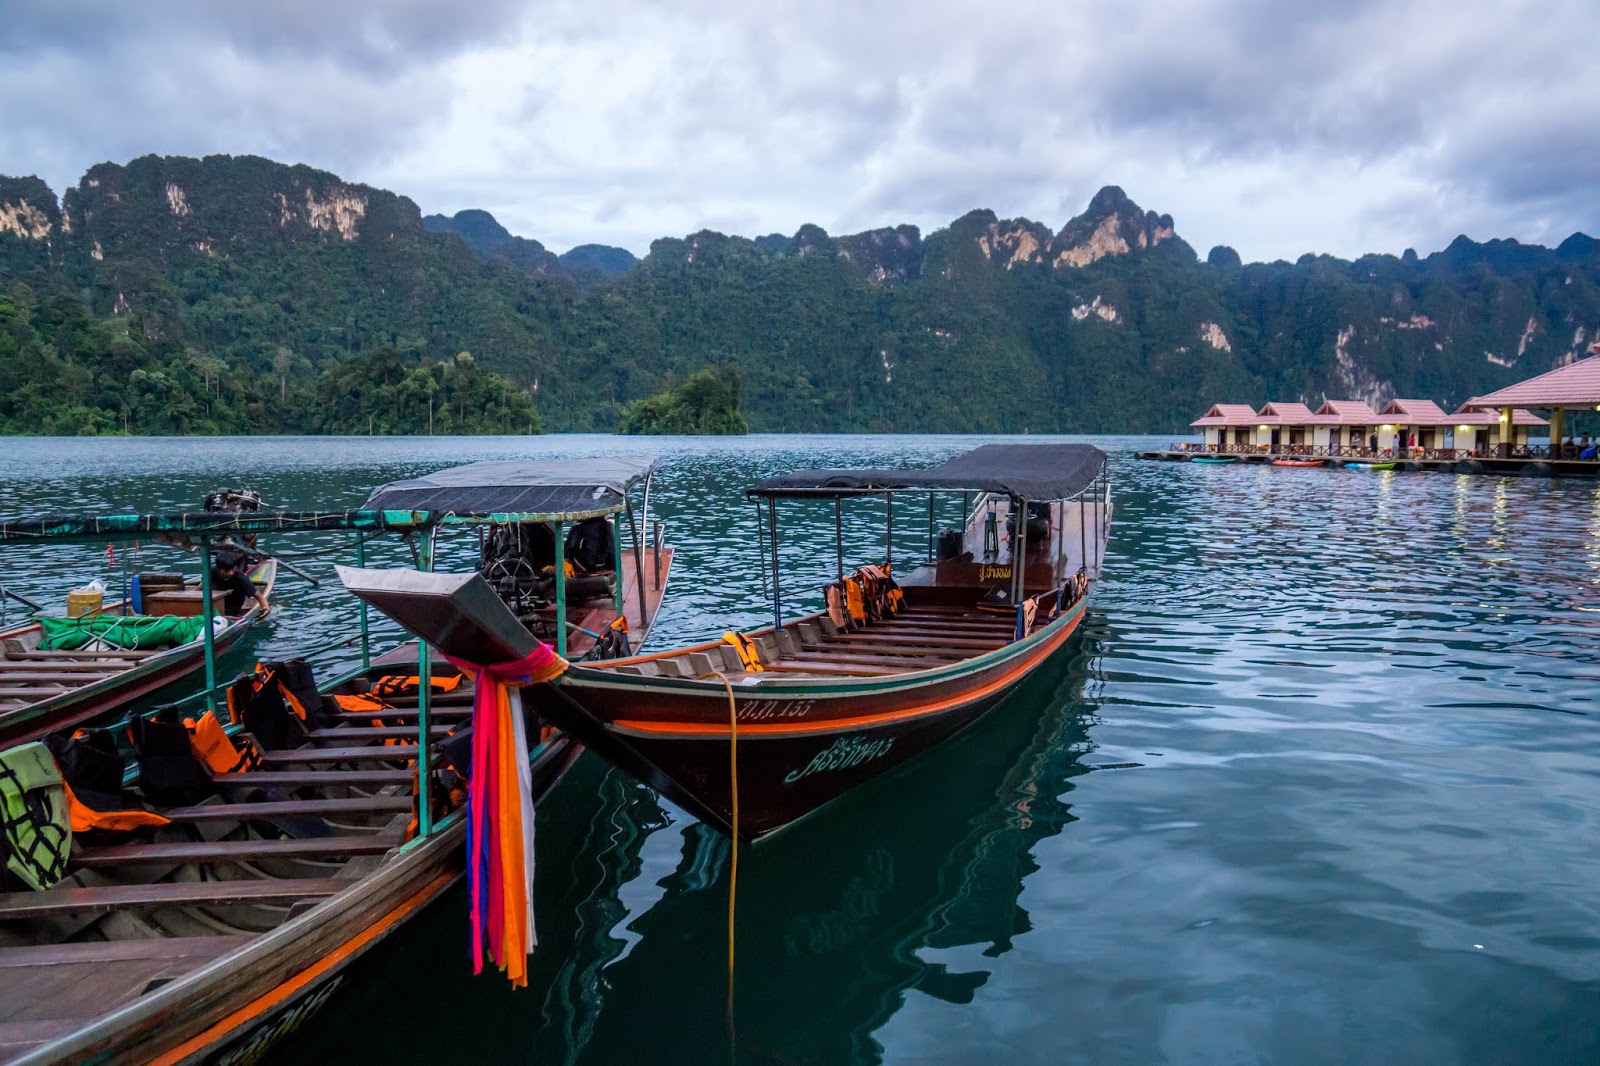 Прекрасное озеро Чео Лан. Посетившие пишут: «must see»